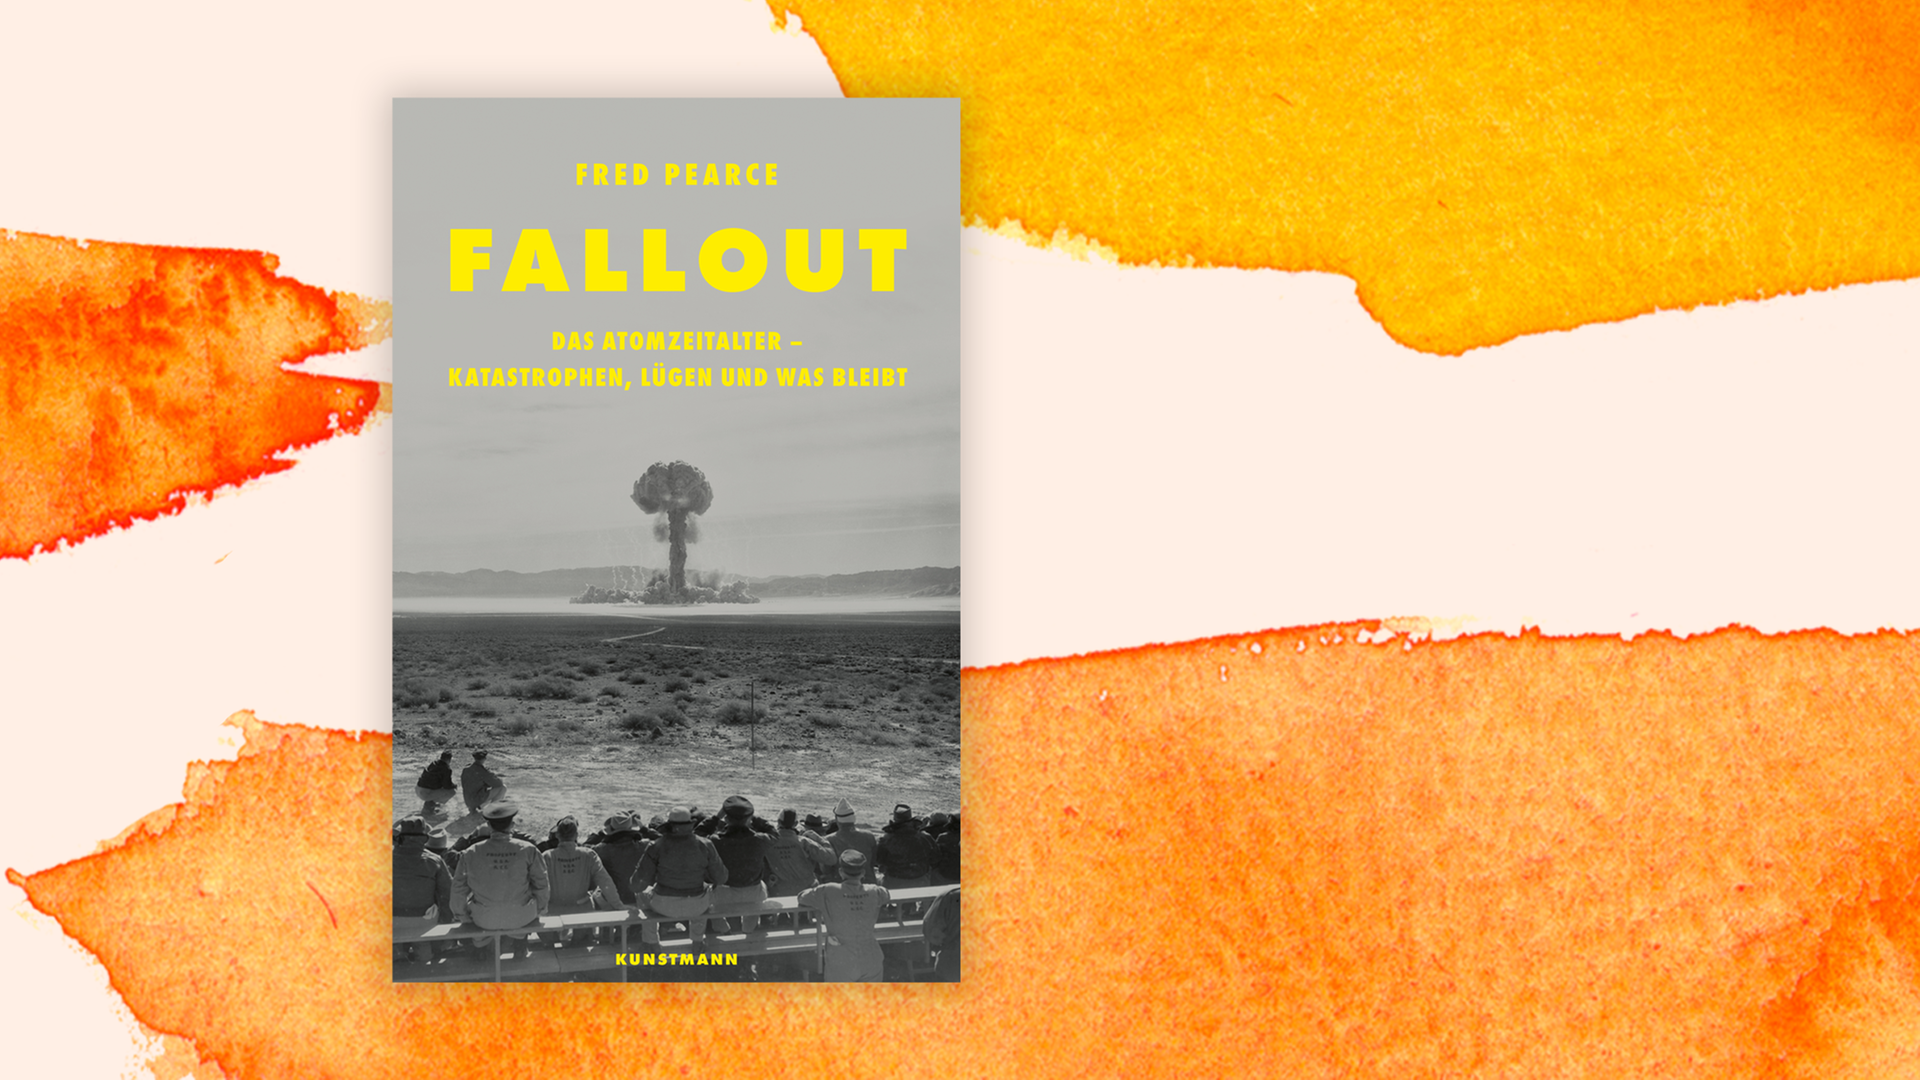 Zu sehen ist das Cover des Buches "Fallout" des Journalisten Fred Pearce.